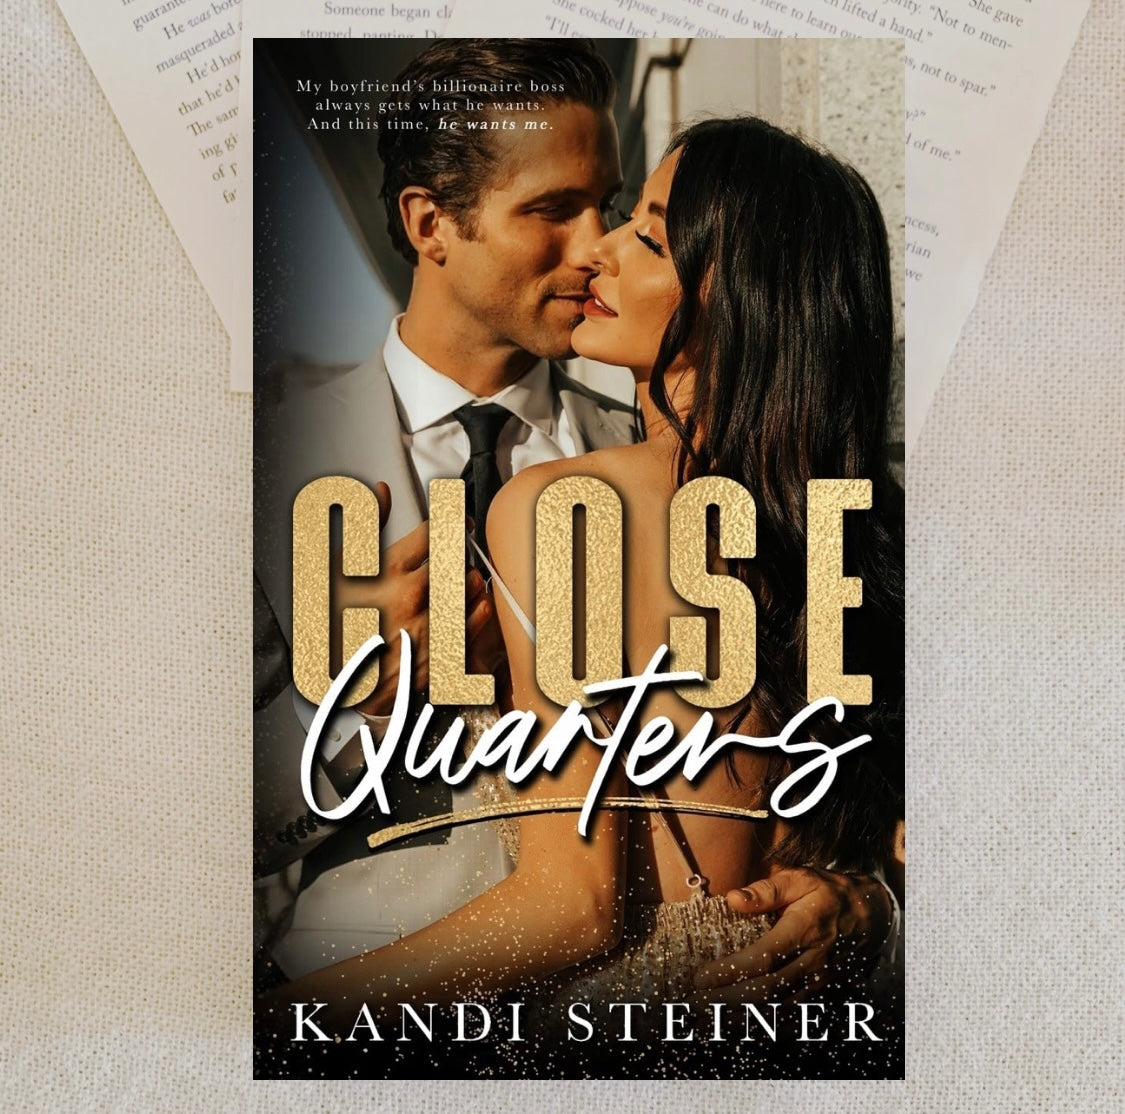 Close Quarters by Kandi Steiner